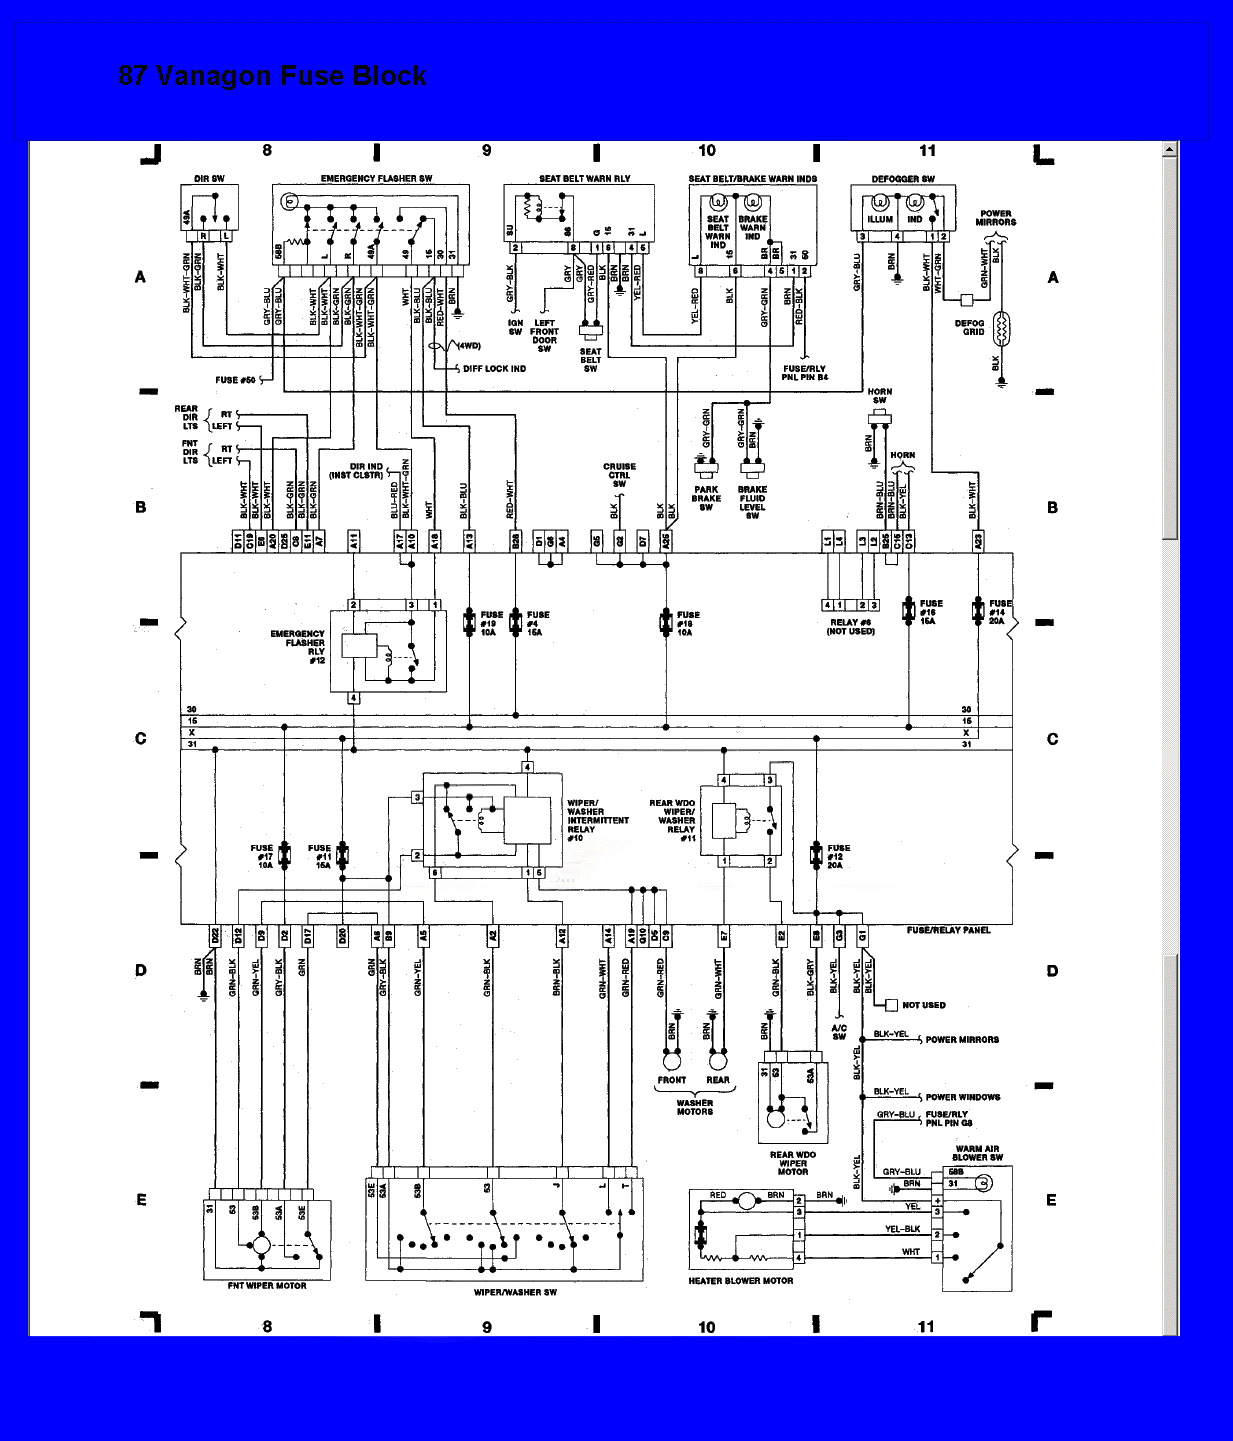 Zimmatic Pivot Wiring Diagram - Free Wiring Diagram